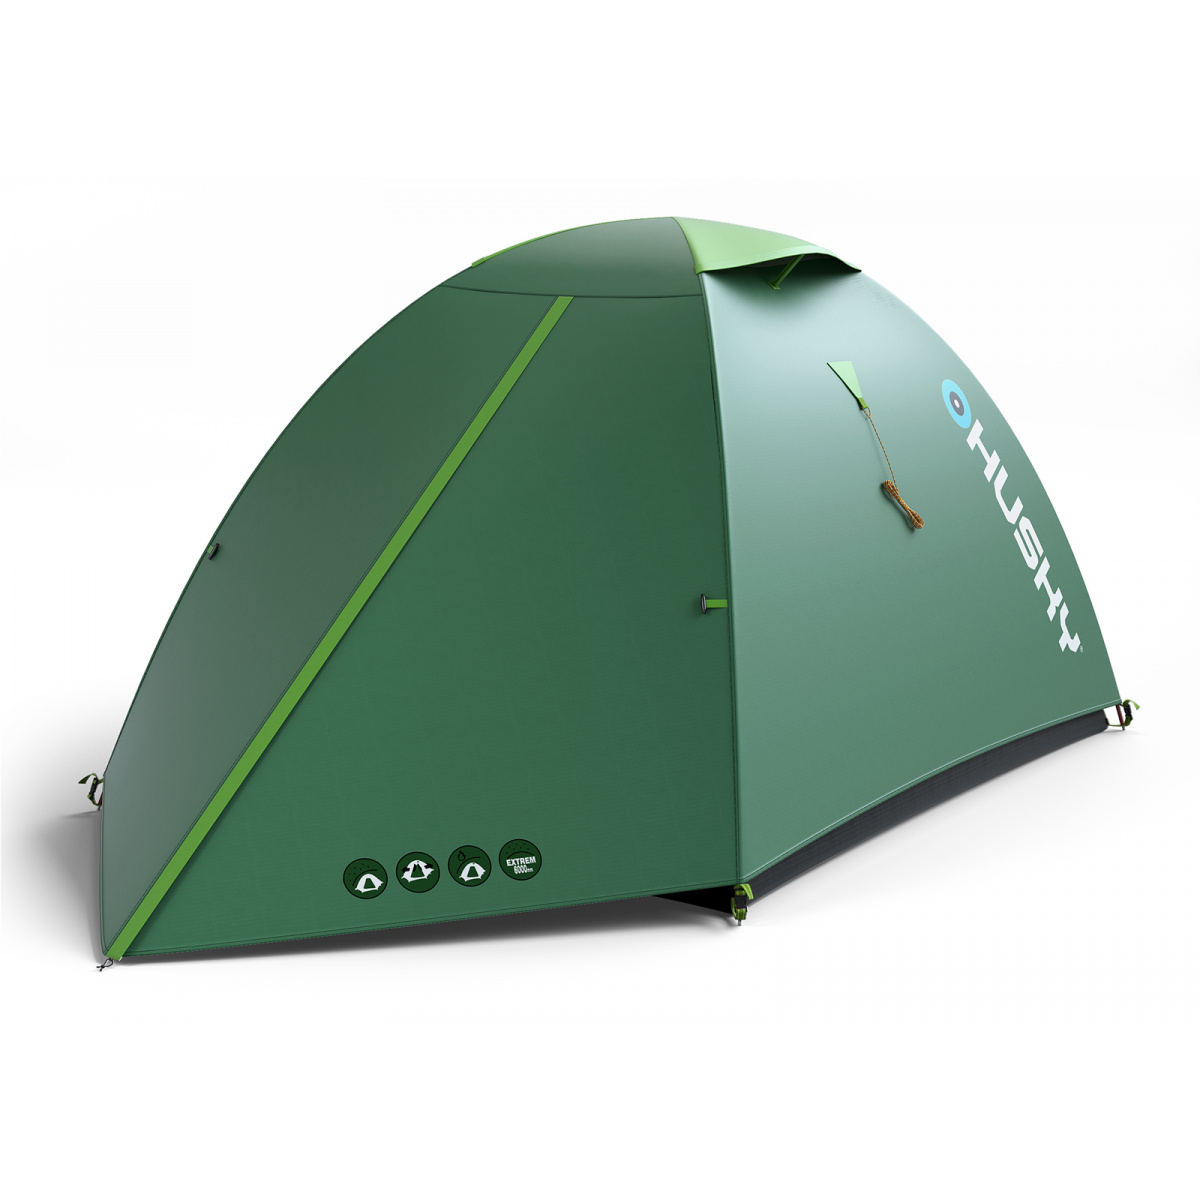 Husky Bizam 2 Plus - Tent